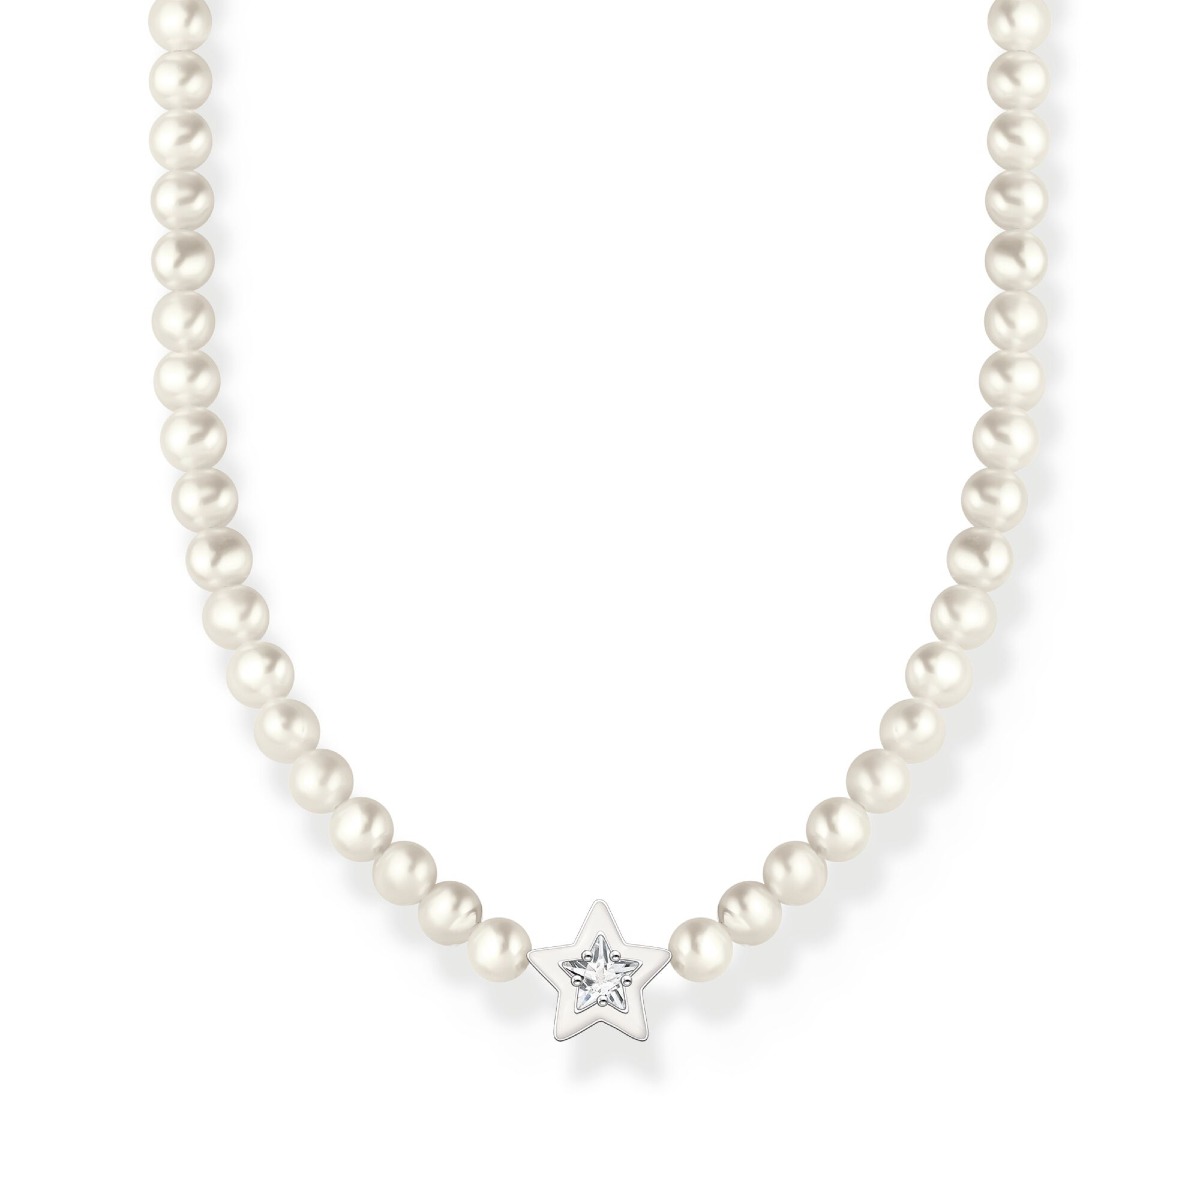 Thomas Sabo Pearl Star Necklace | Star necklace, Thomas sabo, Skull pendant